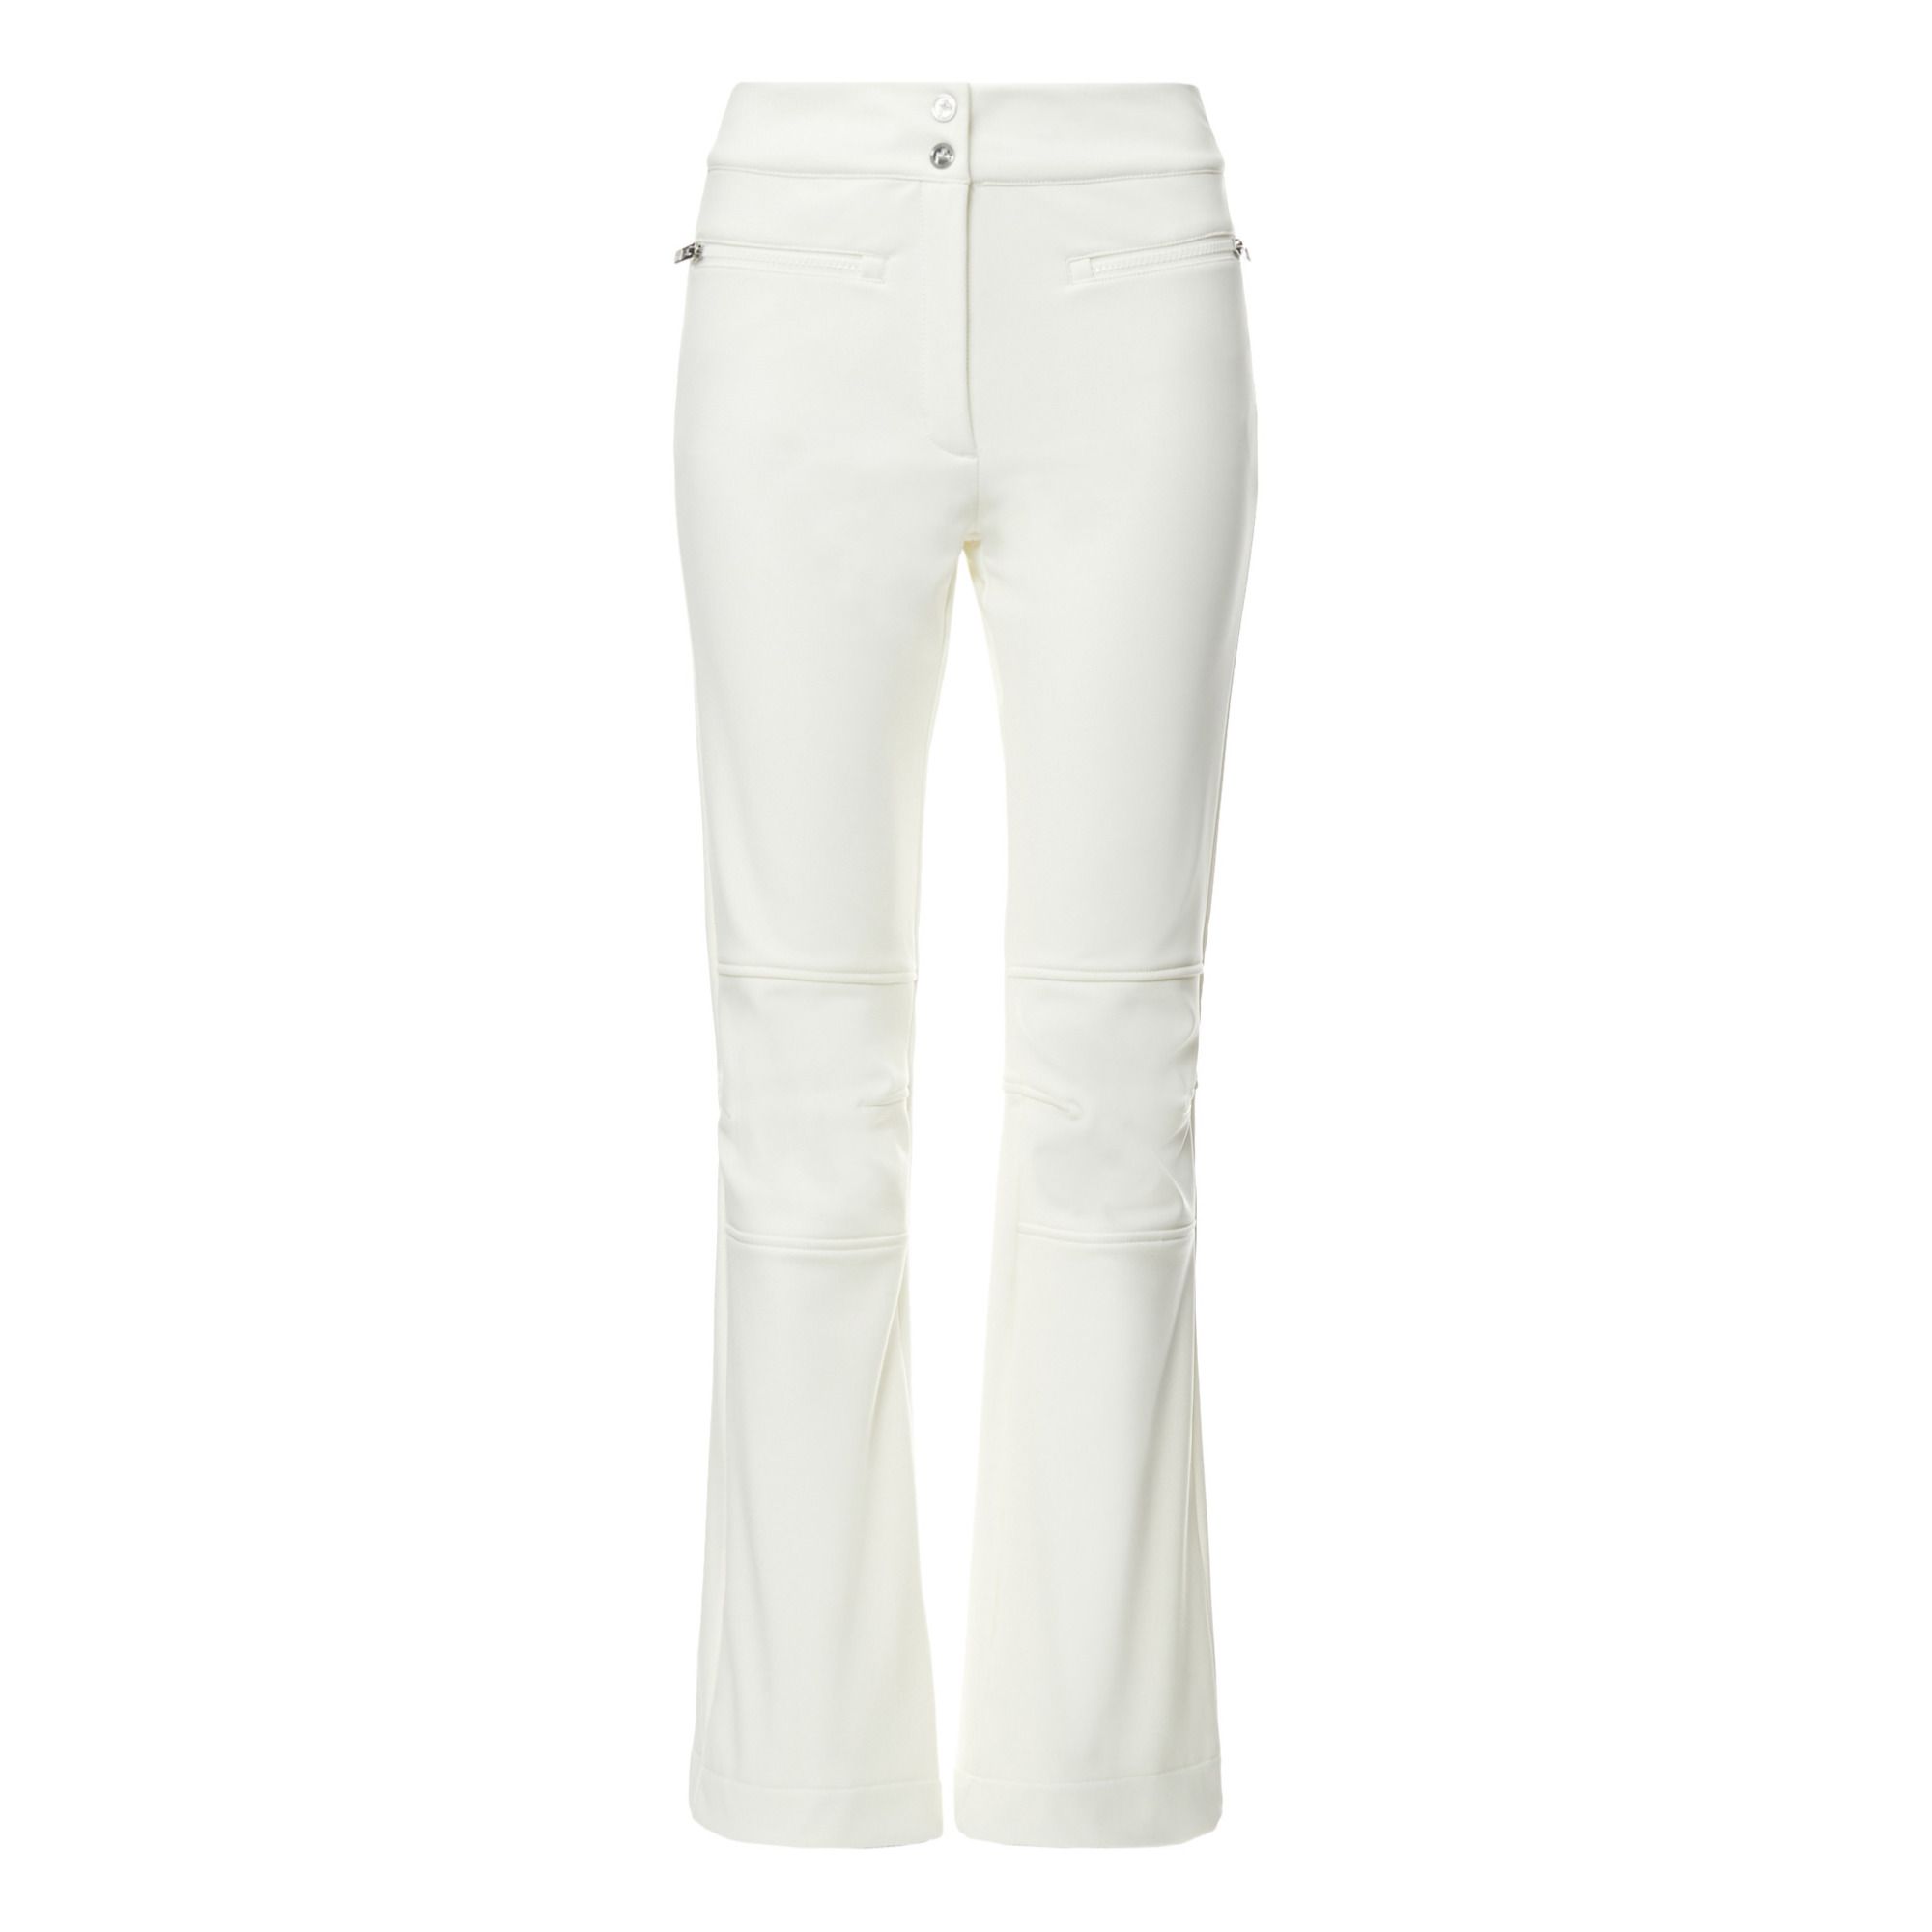 Fusalp - Pantalon de Ski Diana - Collection Femme - - Blanc